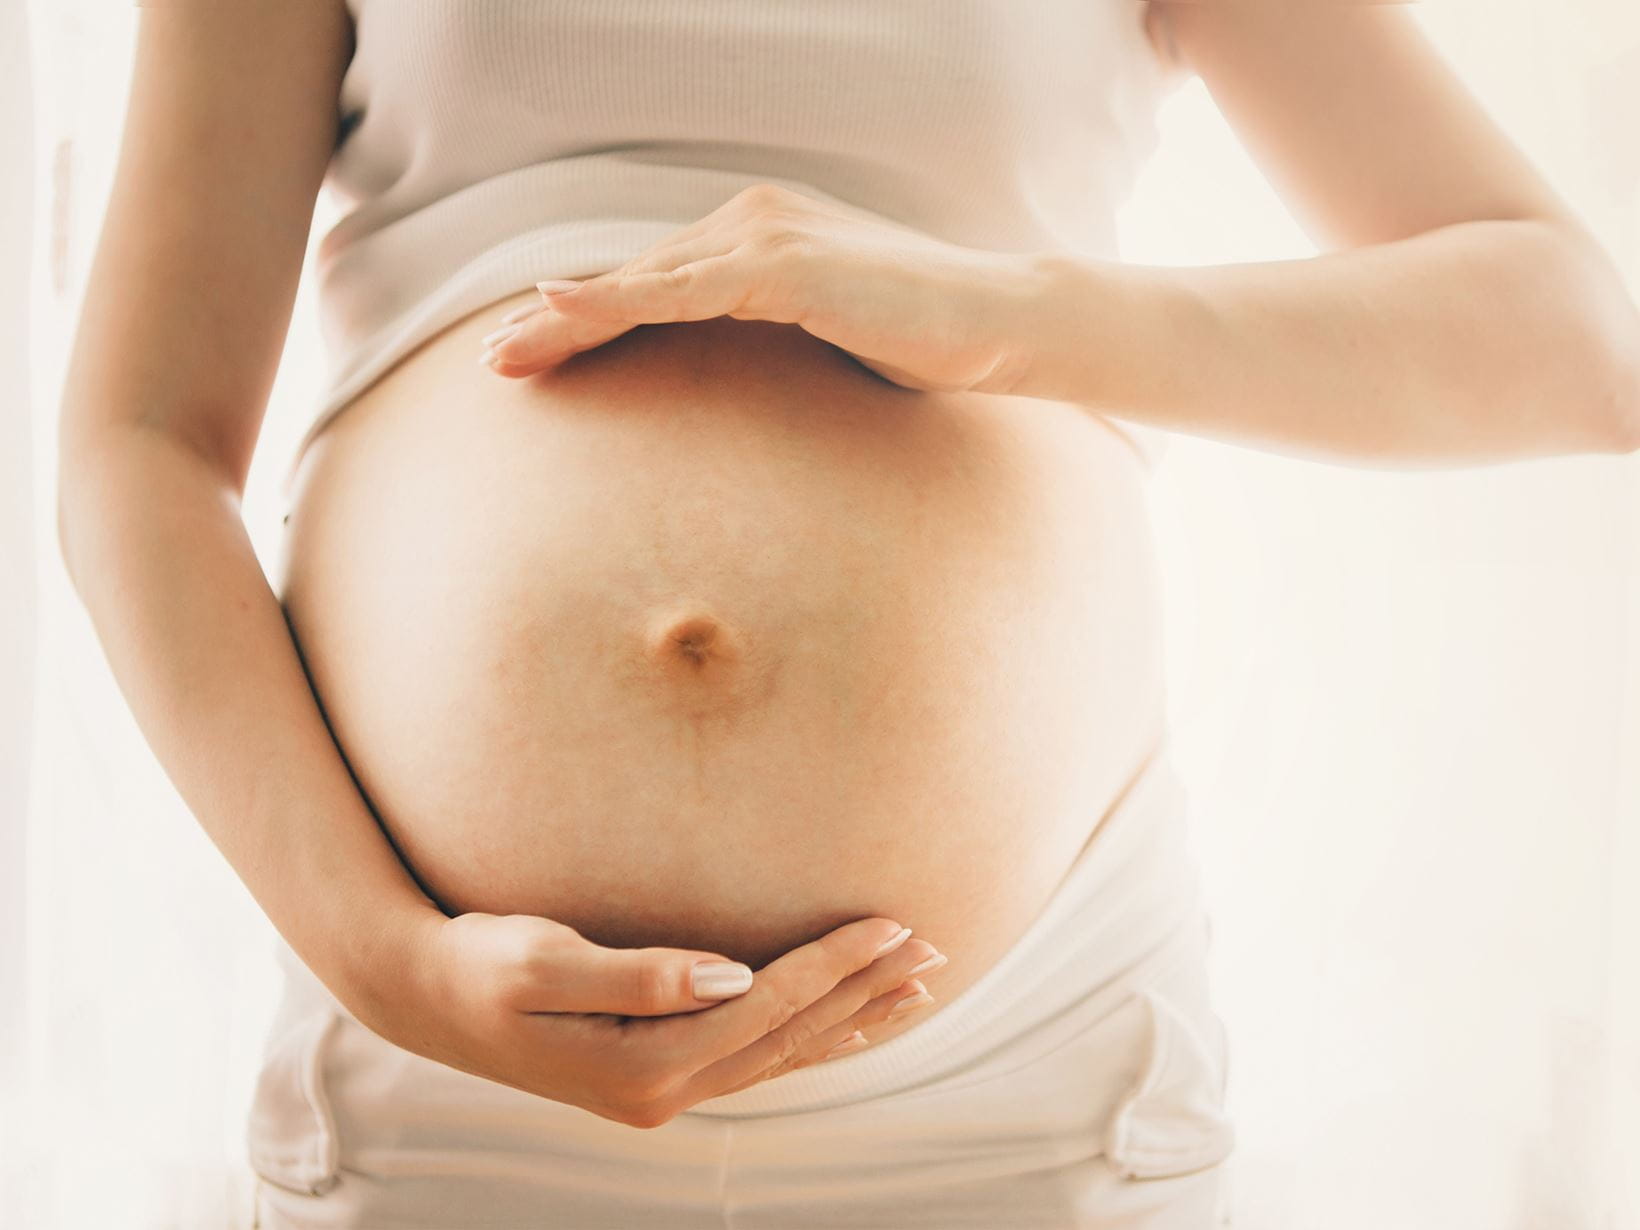 Striák a terhesség alatt?